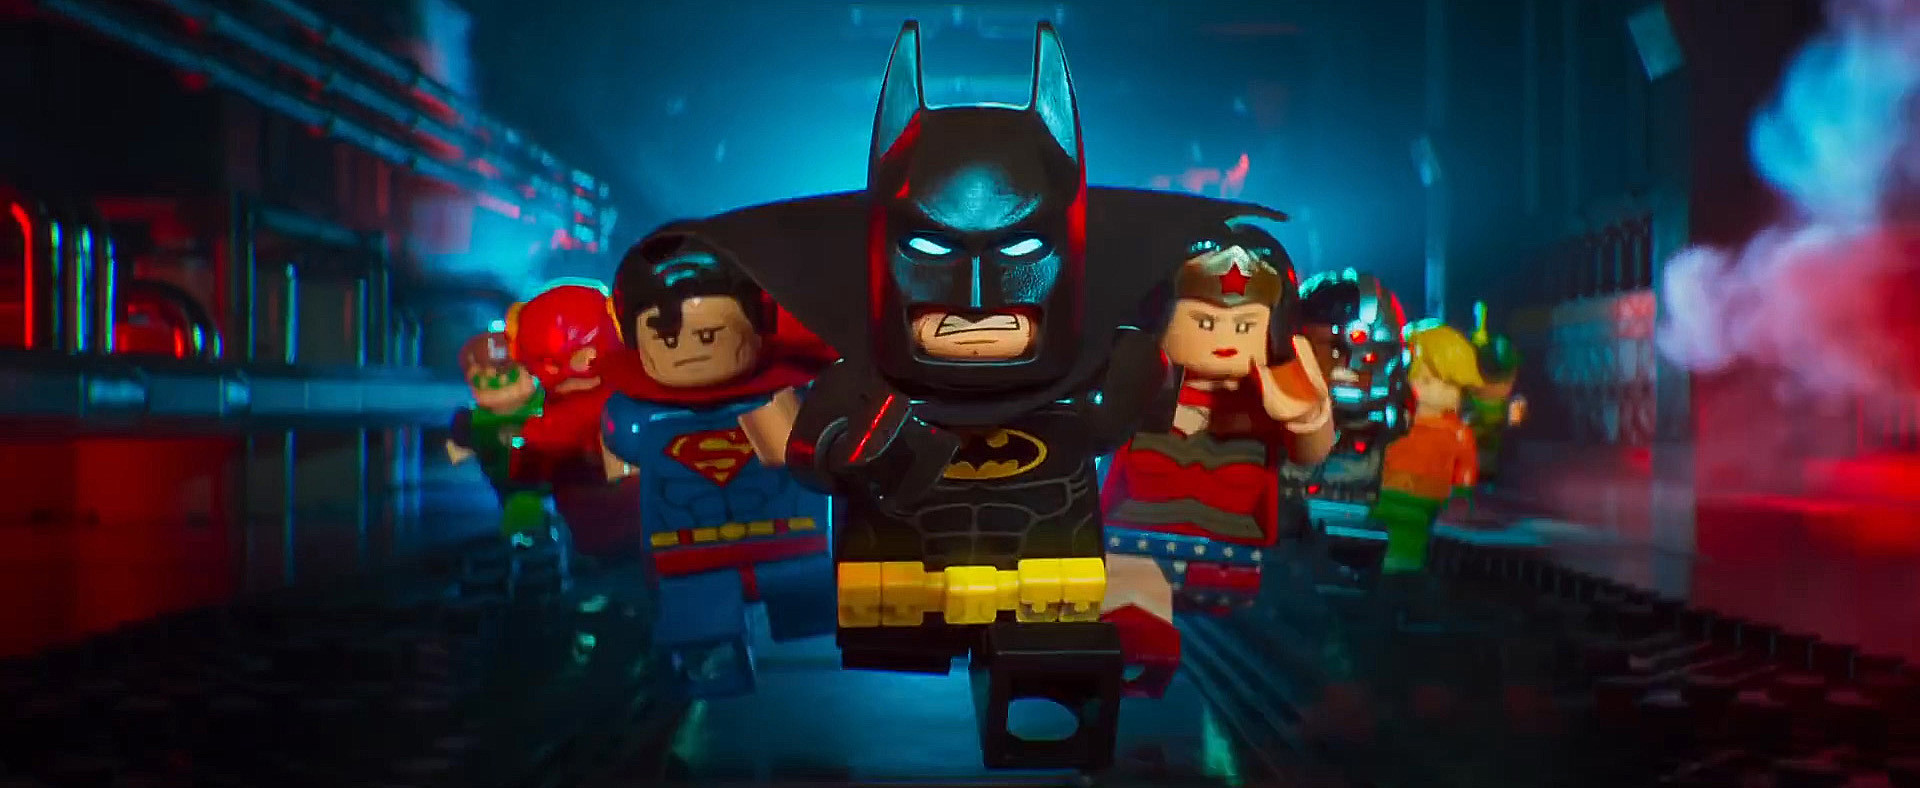 The Lego Batman Animation Movie Wallpaper